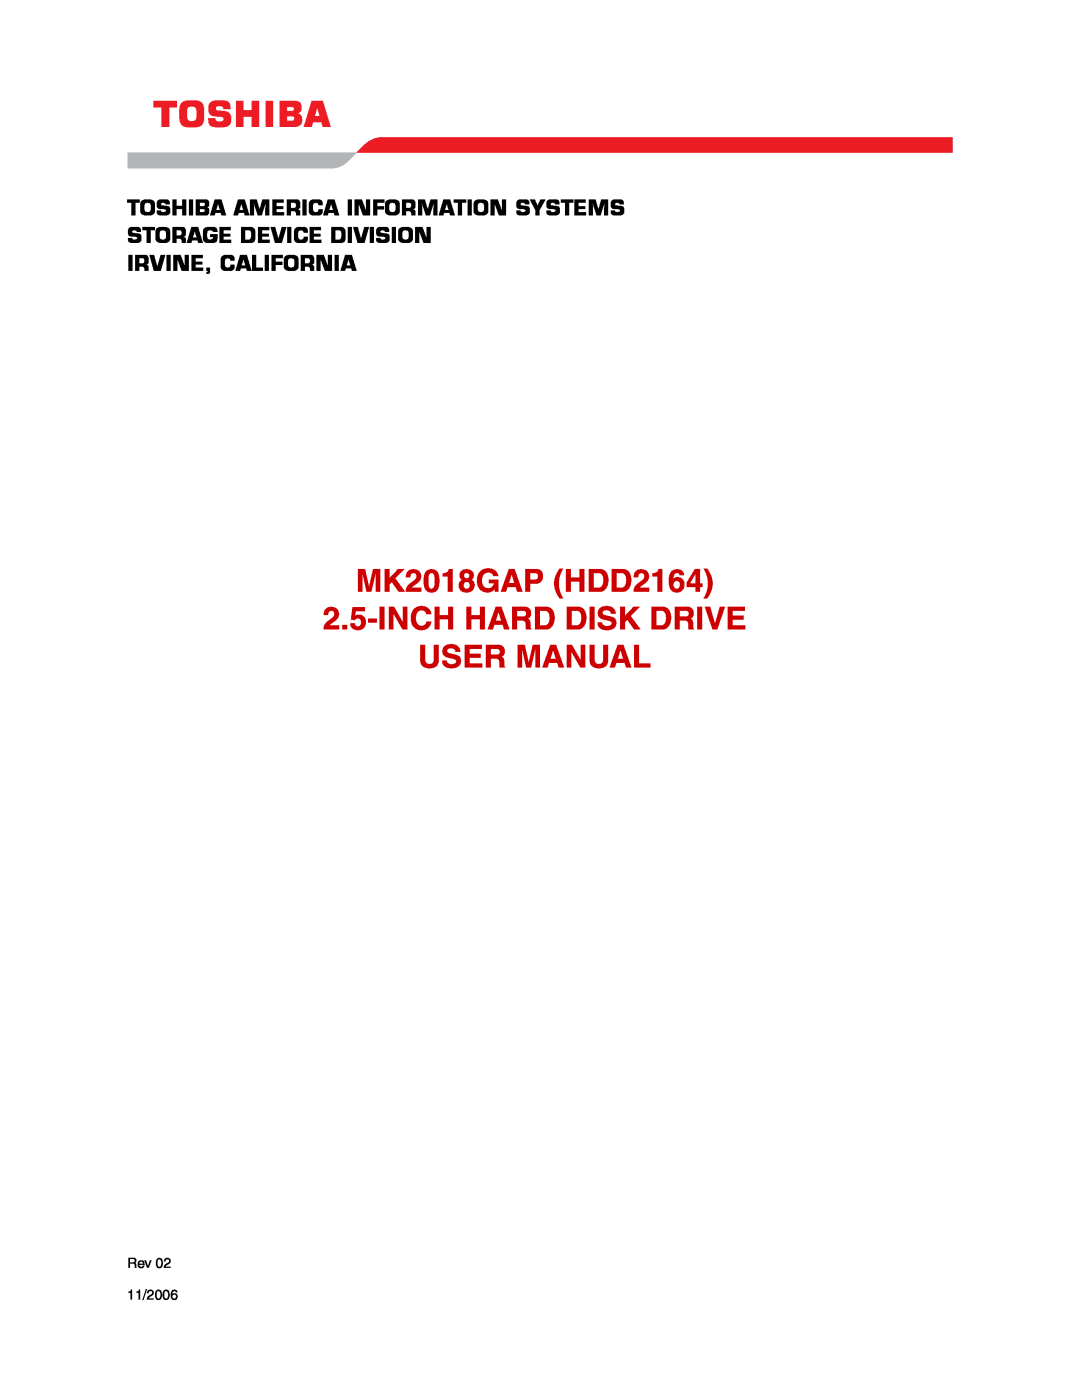 Toshiba user manual MK2018GAP HDD2164 2.5-INCH HARD DISK DRIVE USER MANUAL, Irvine, California, Rev 11/2006 